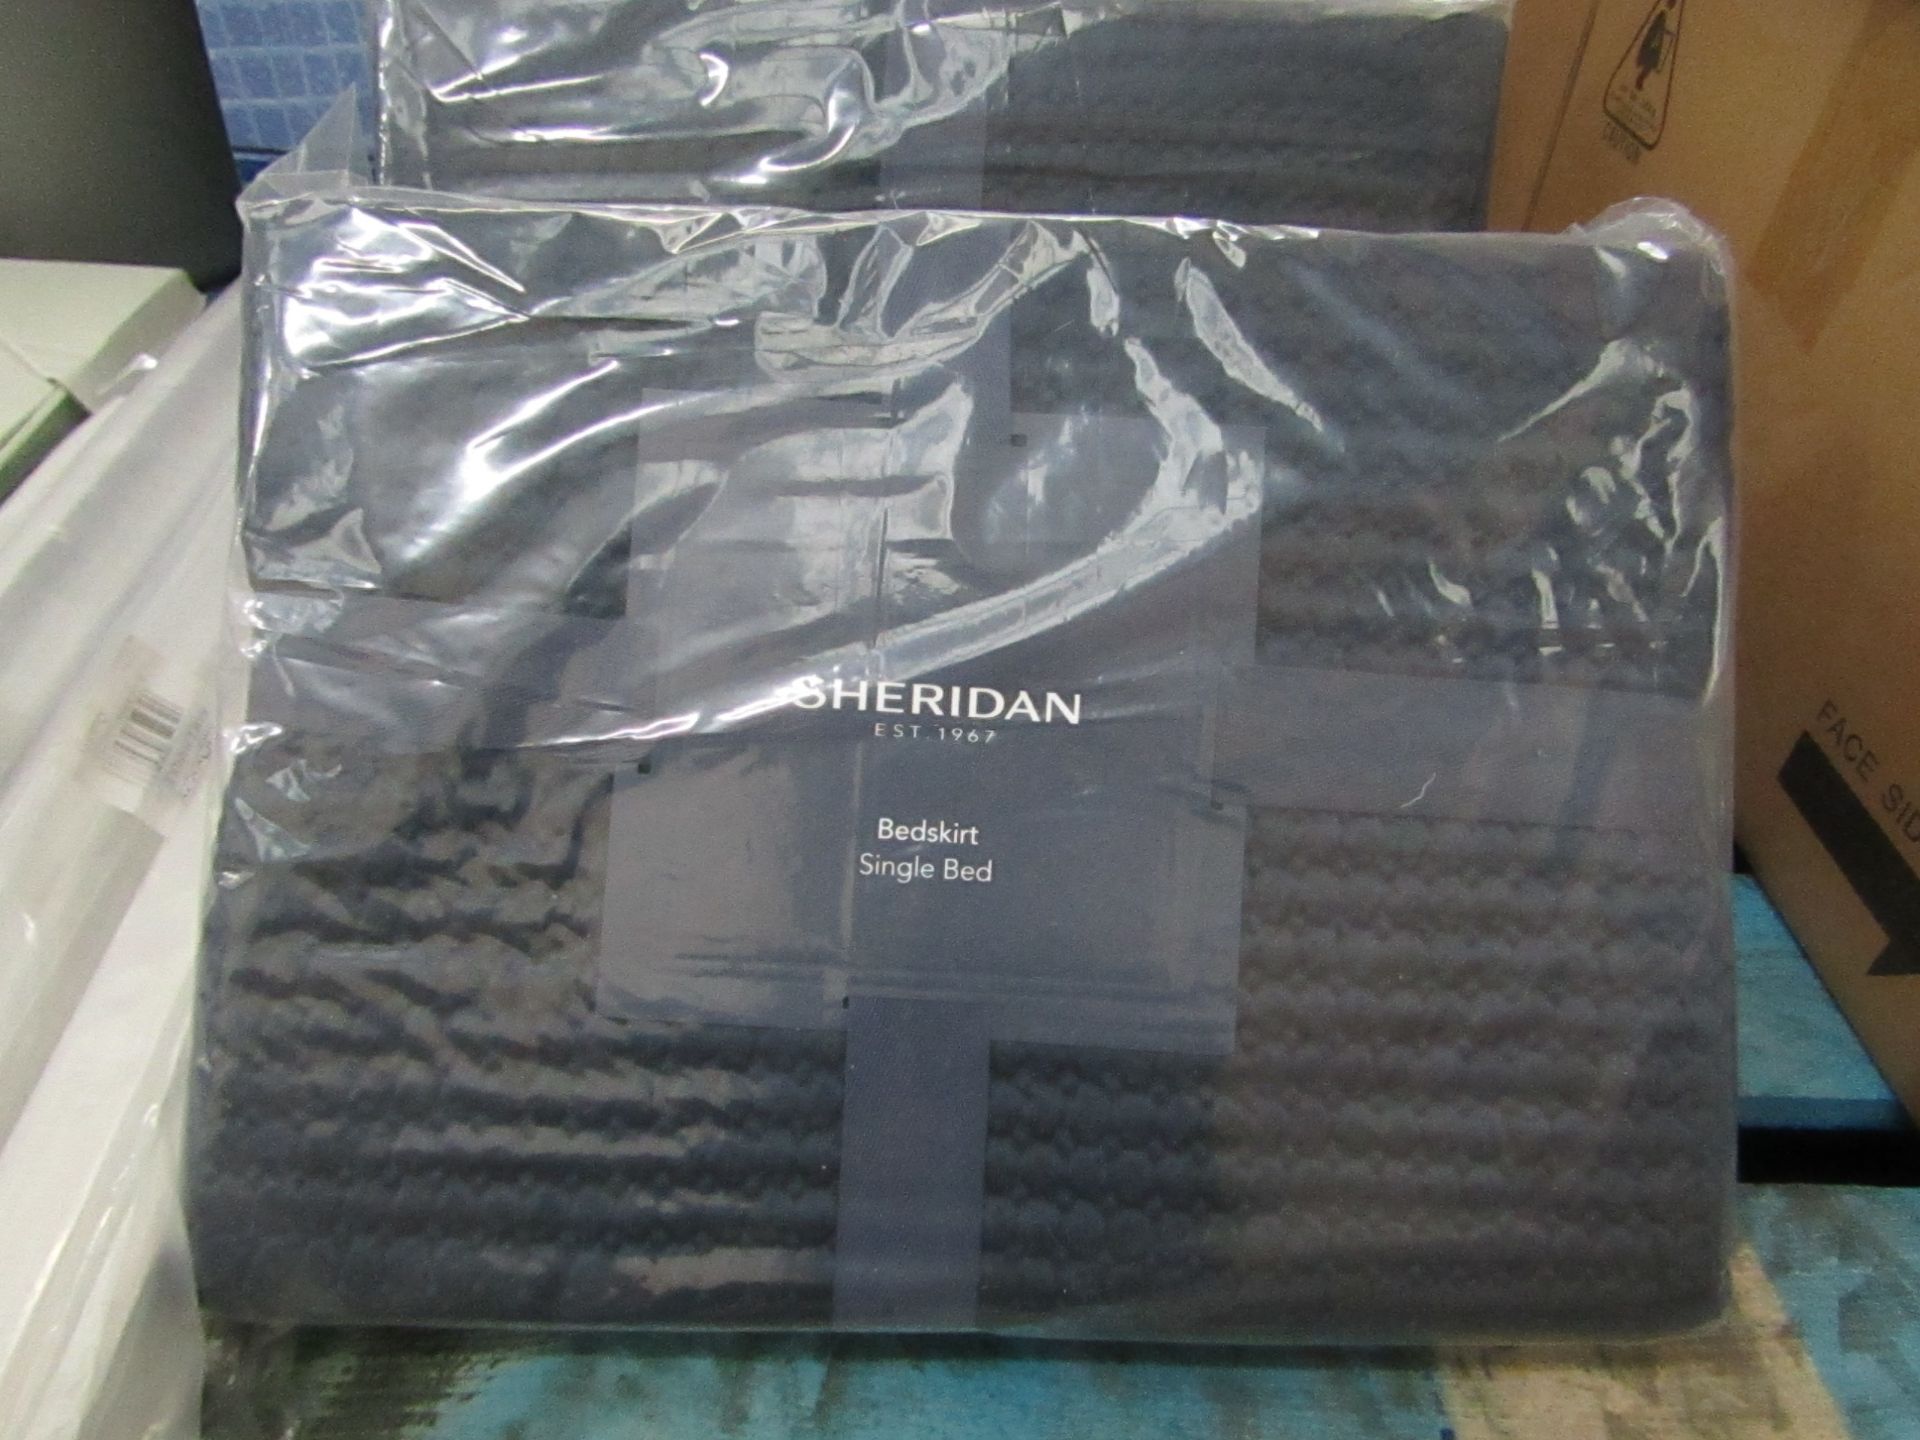 Sheridan - Christobel Bedskirt - Colour Midnight - Size Single - New & Packaged. RRP £75.